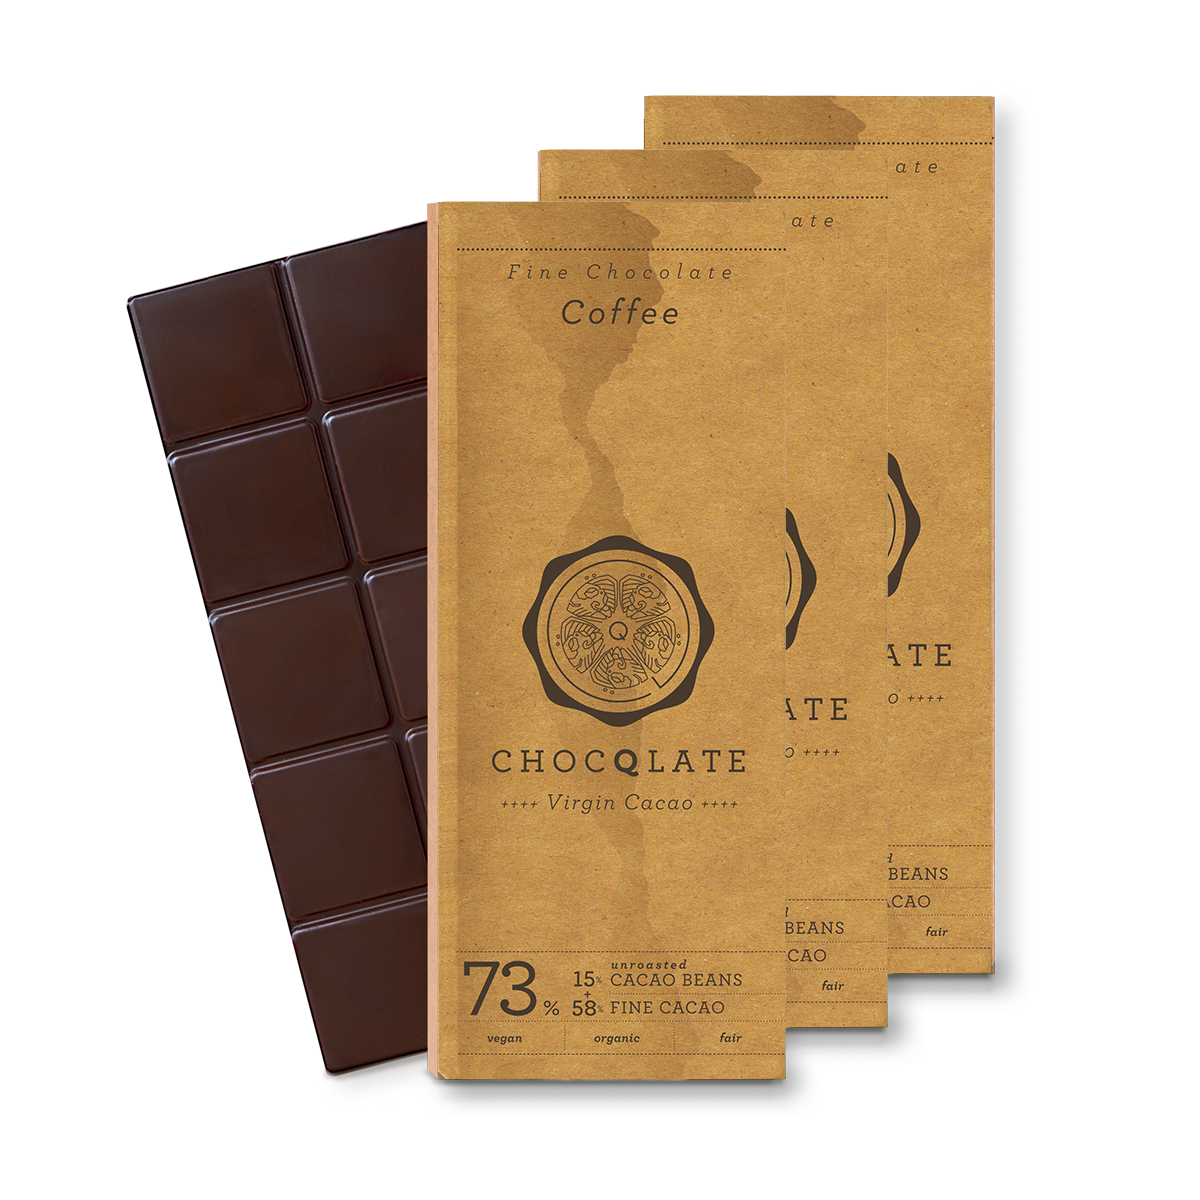 CHOCQLATE pure organic chocolate with virgin cocoa